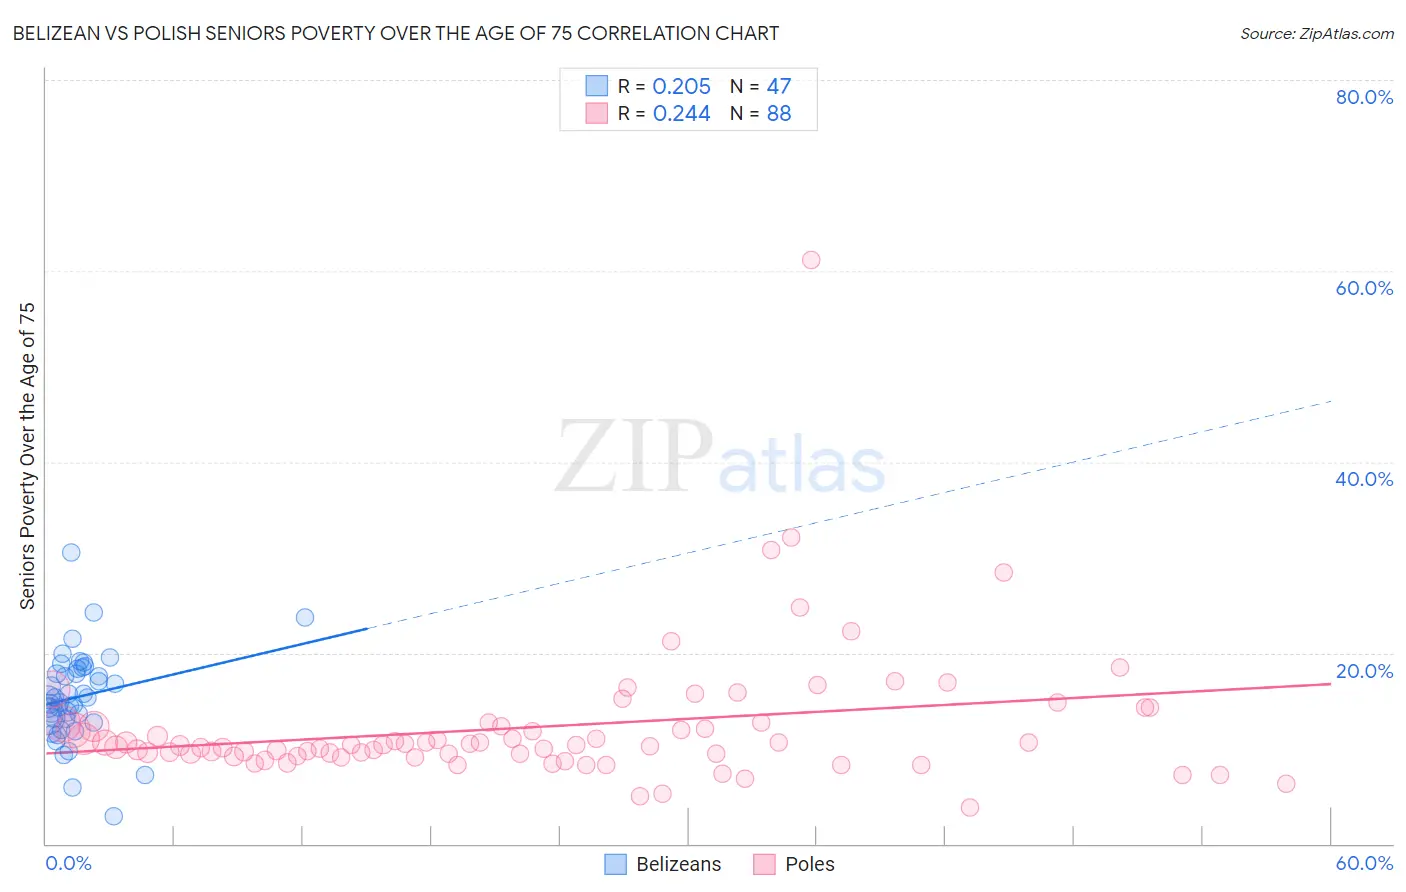 Belizean vs Polish Seniors Poverty Over the Age of 75